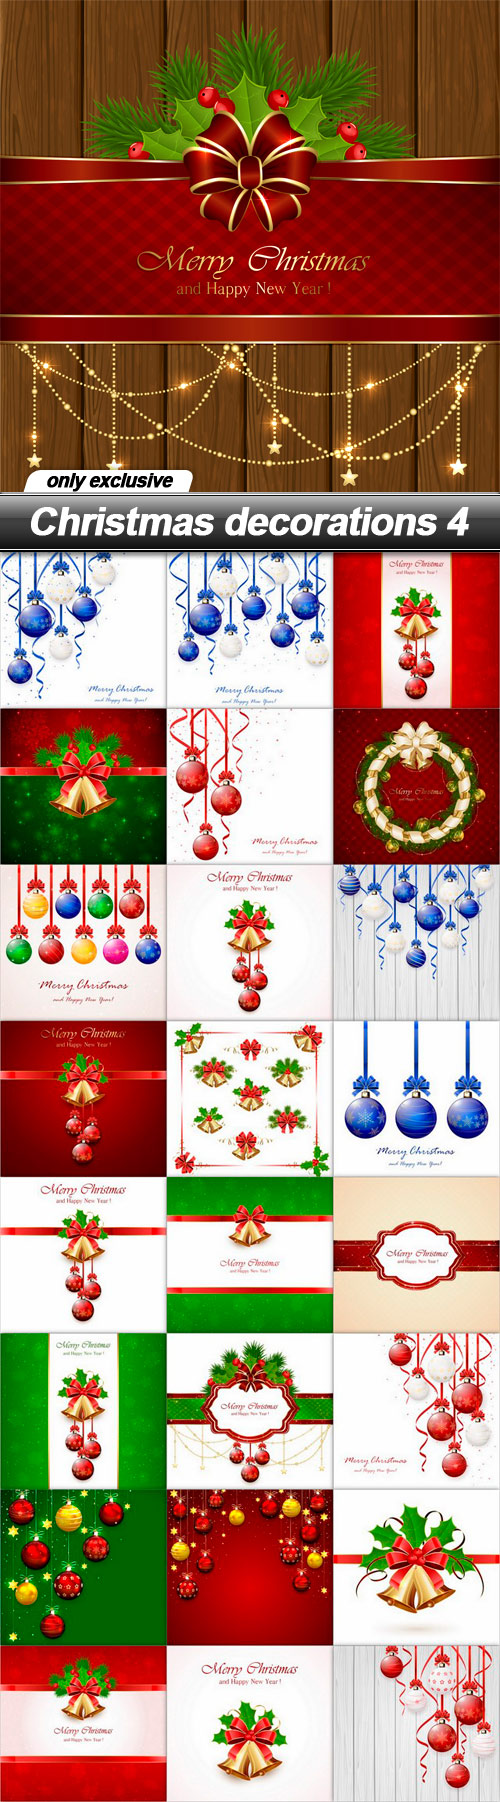 Christmas decorations 4 - 25 EPS